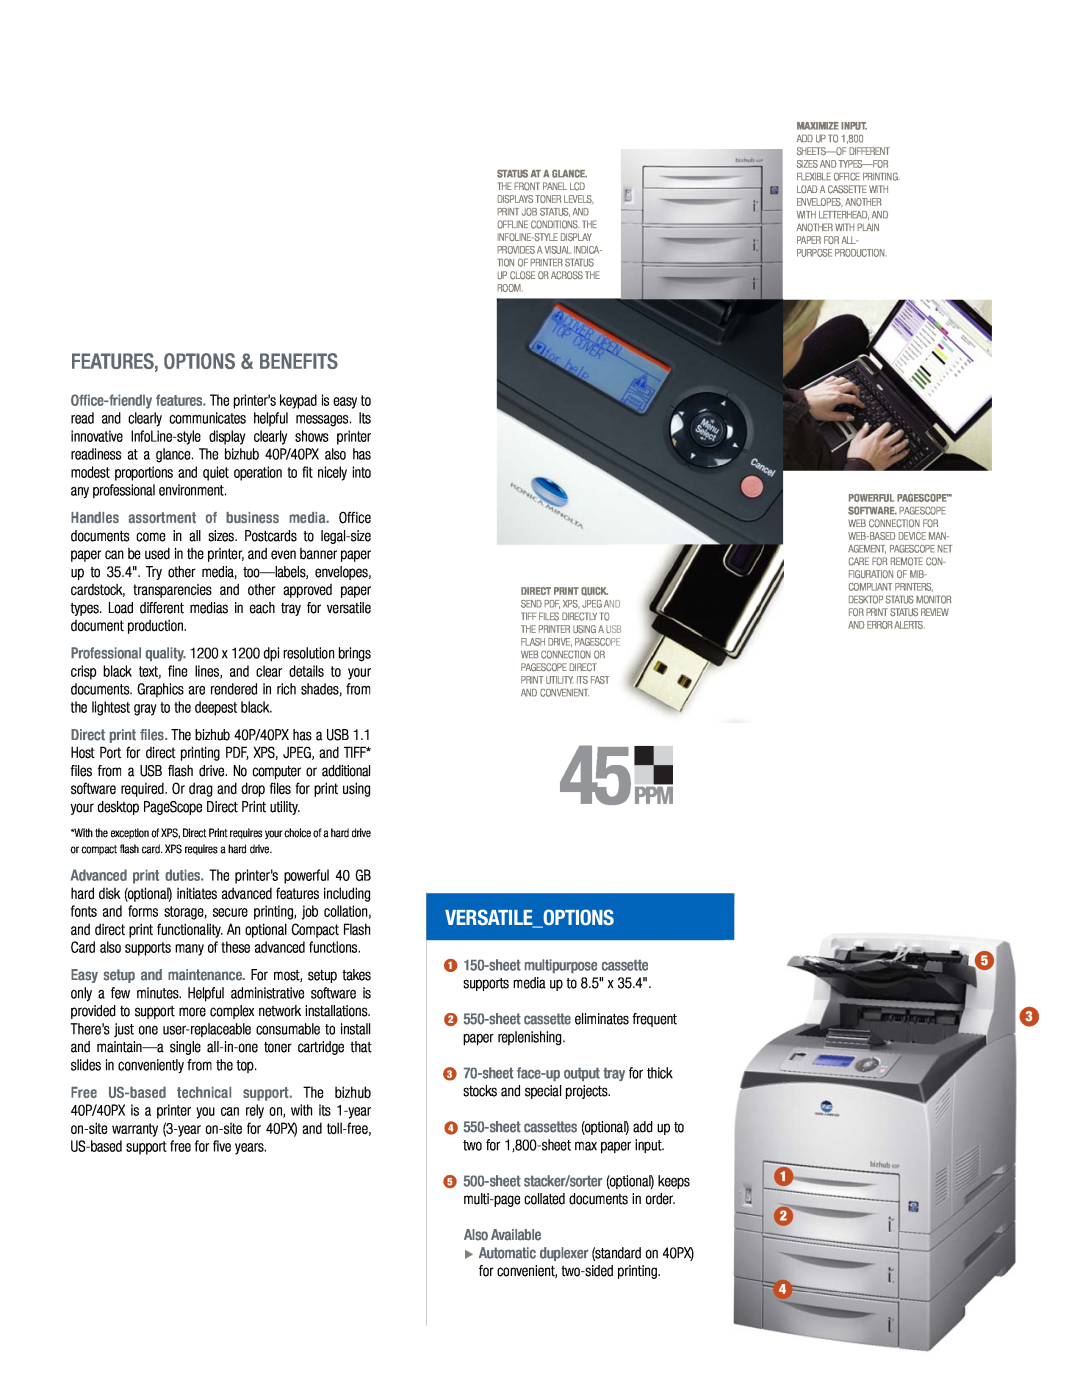 Konica Minolta 40PX manual Features, Options & Benefits, Versatile Options, 45PPM 